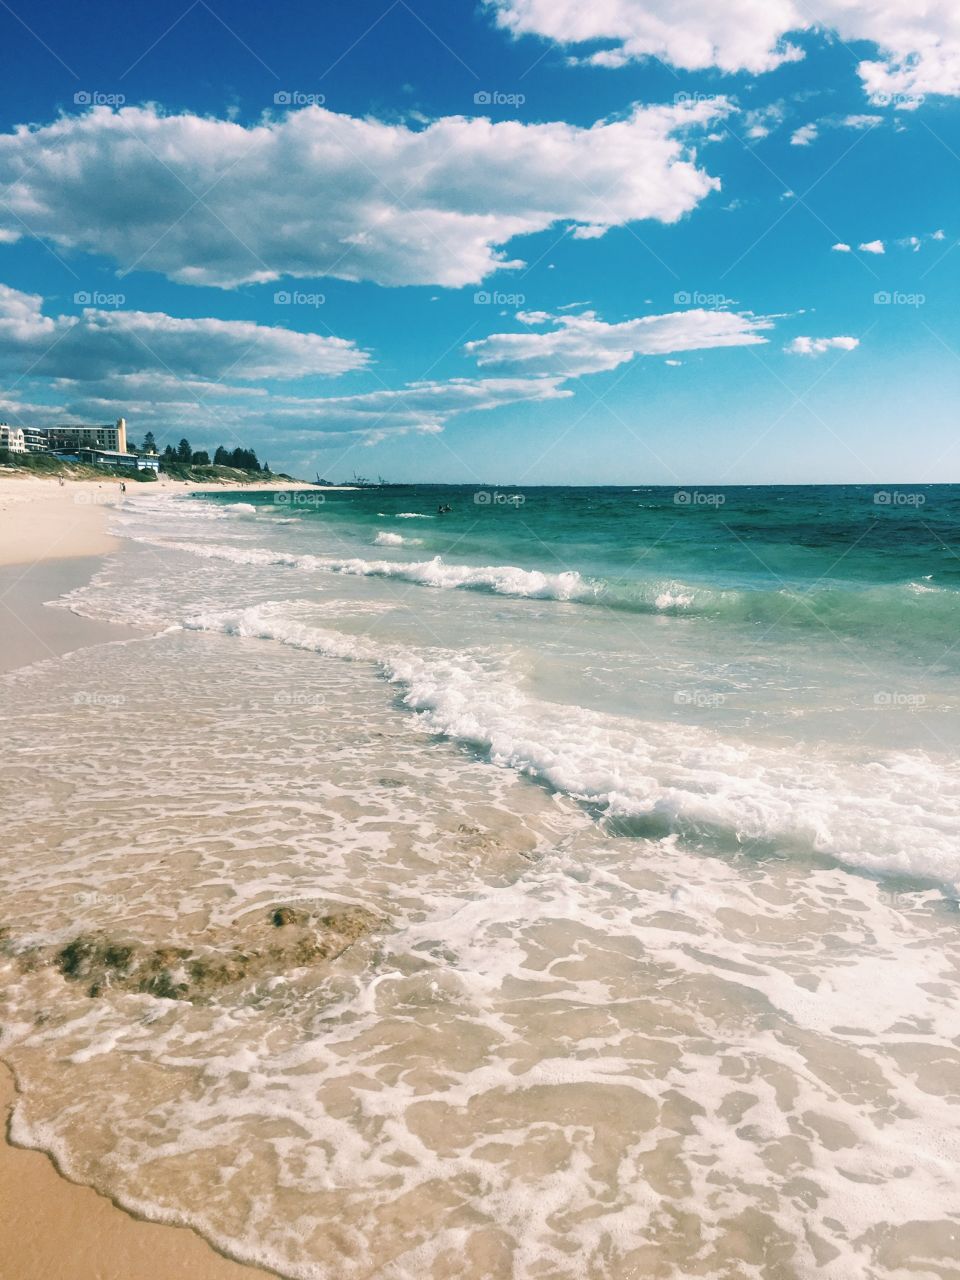 Sunny beach day in Western Australia 